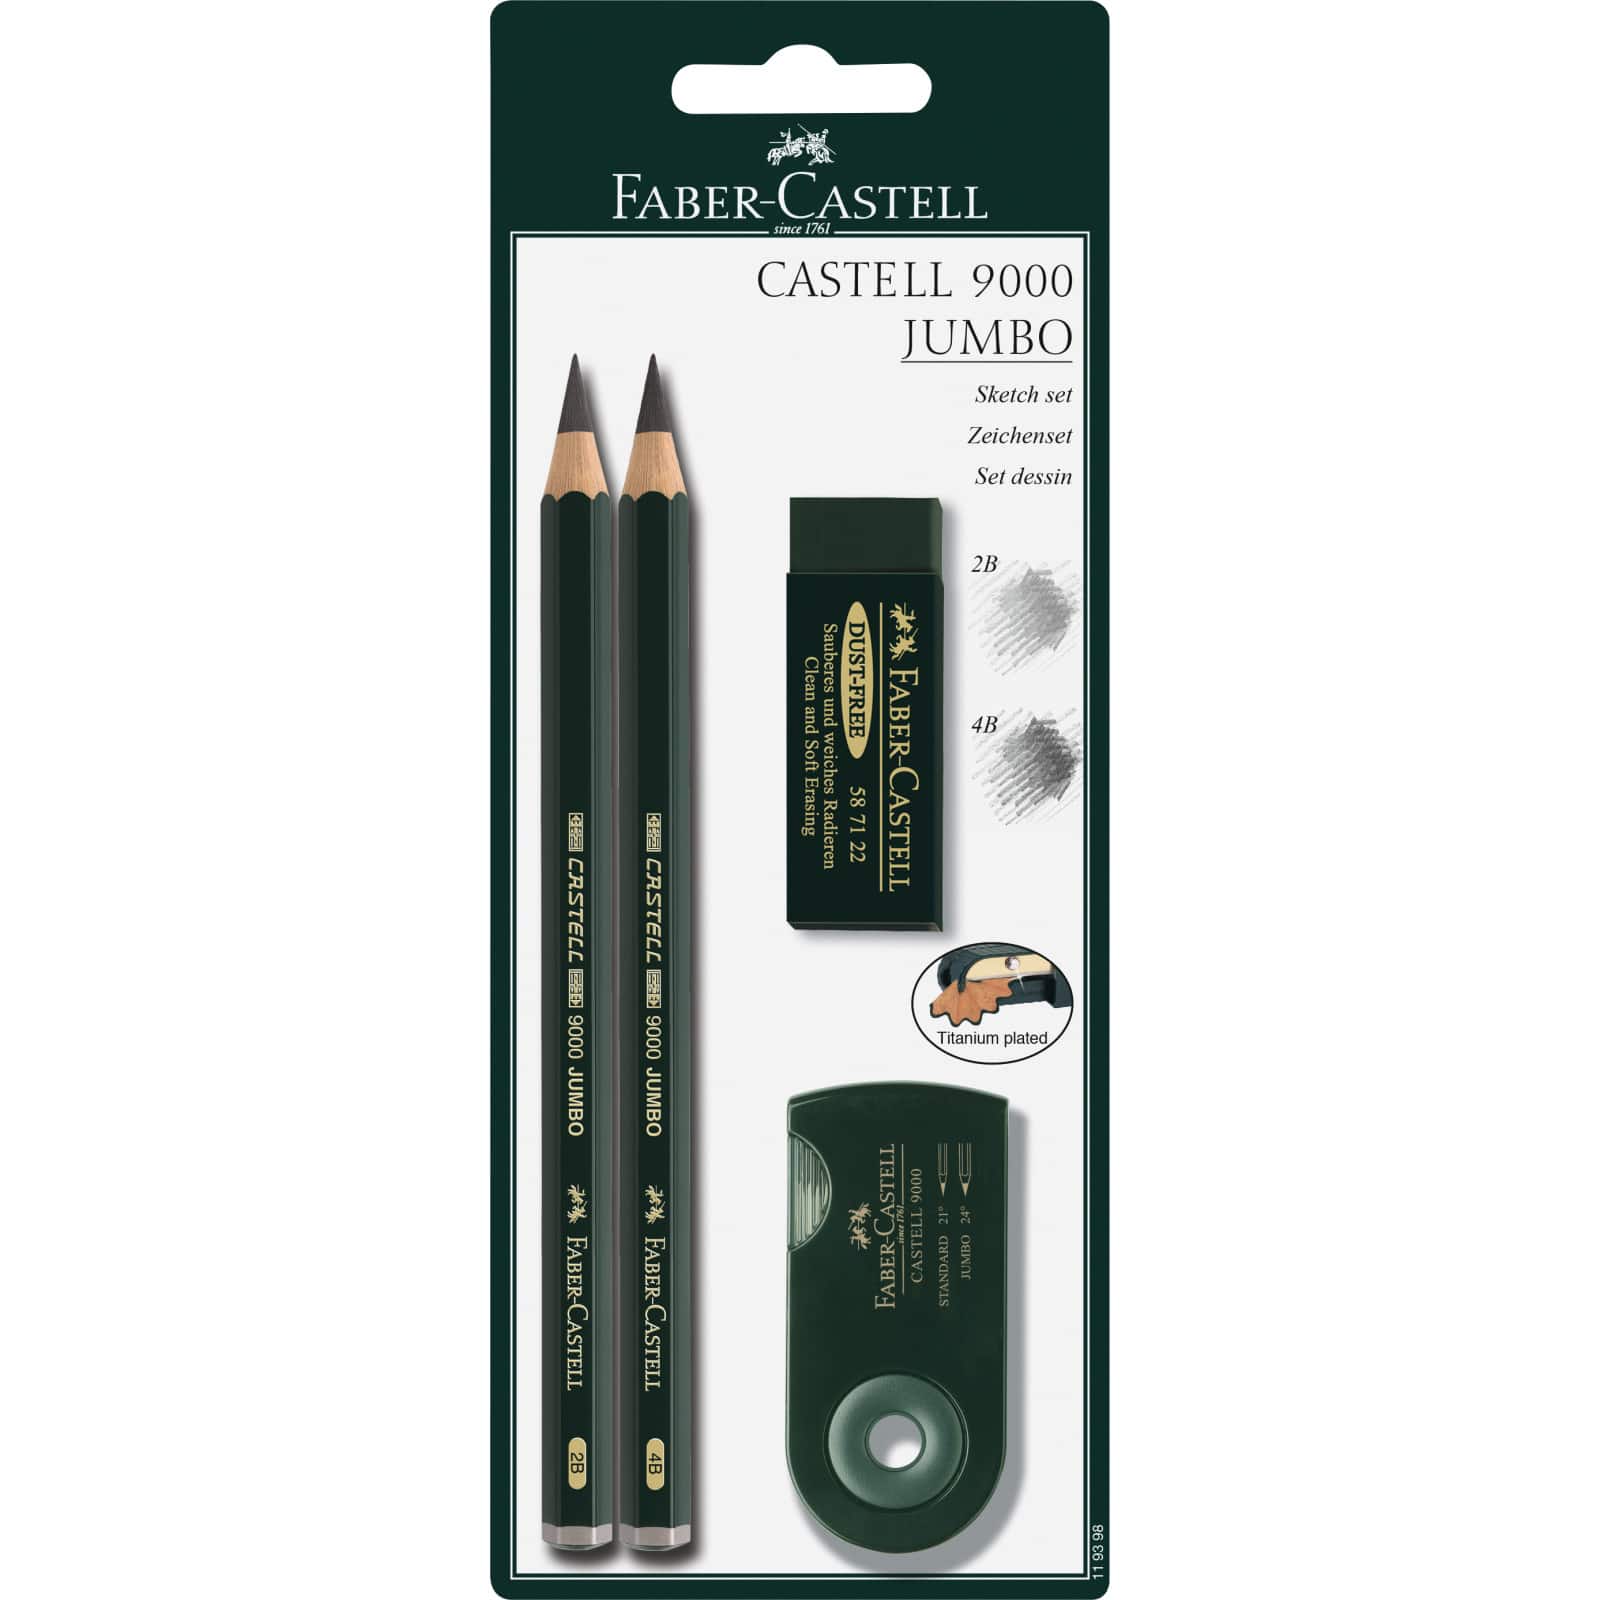 Faber-Castell Graphite Sketch 6-Pencil Set